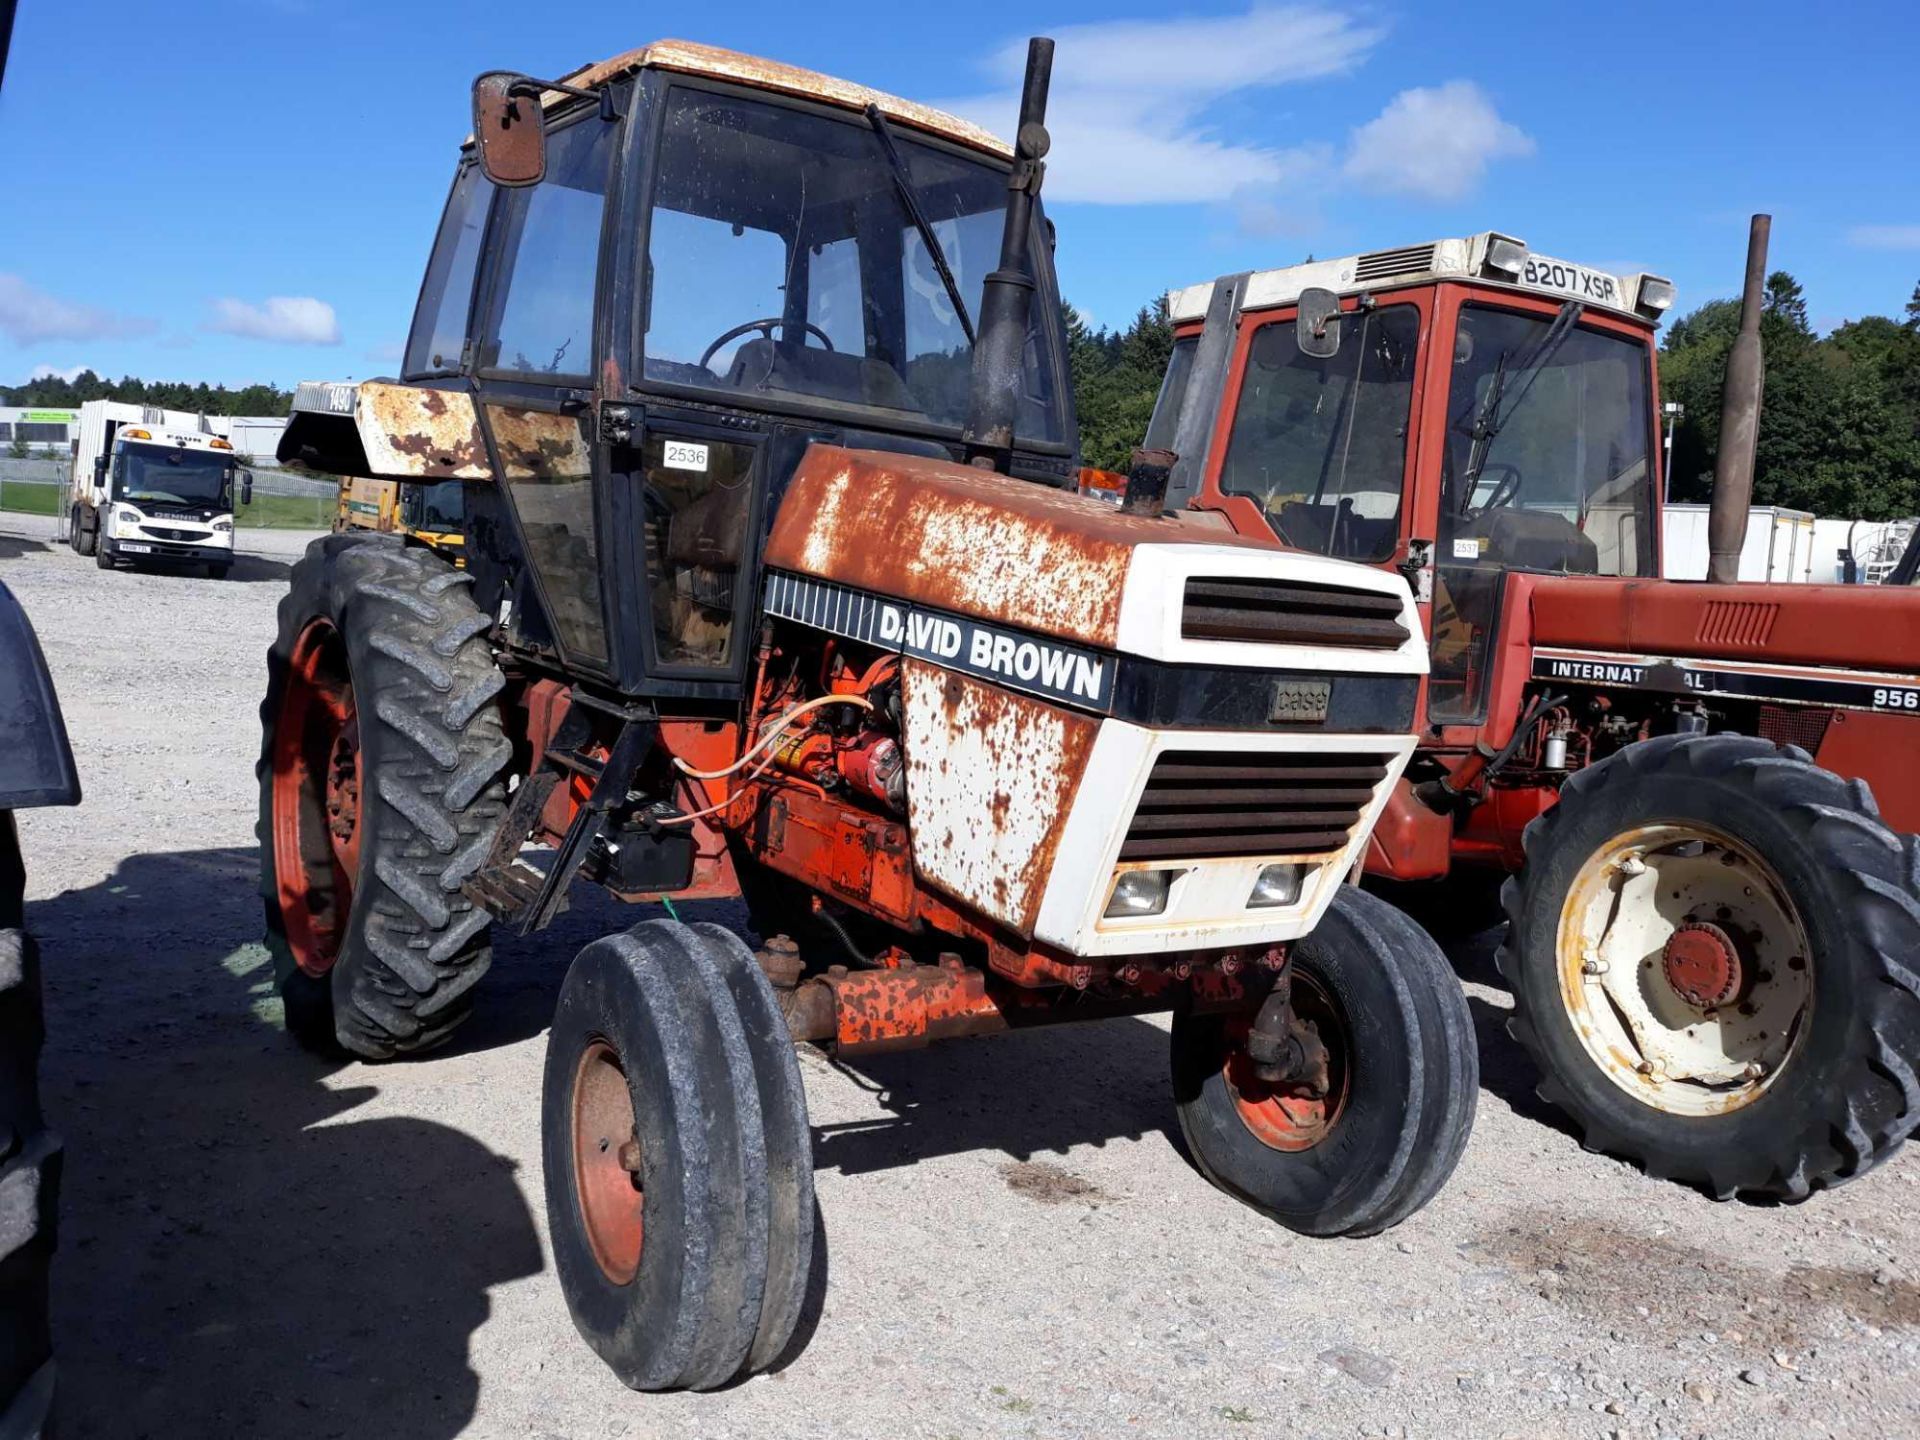 David Brown 1490 - 0cc Tractor - Image 2 of 4